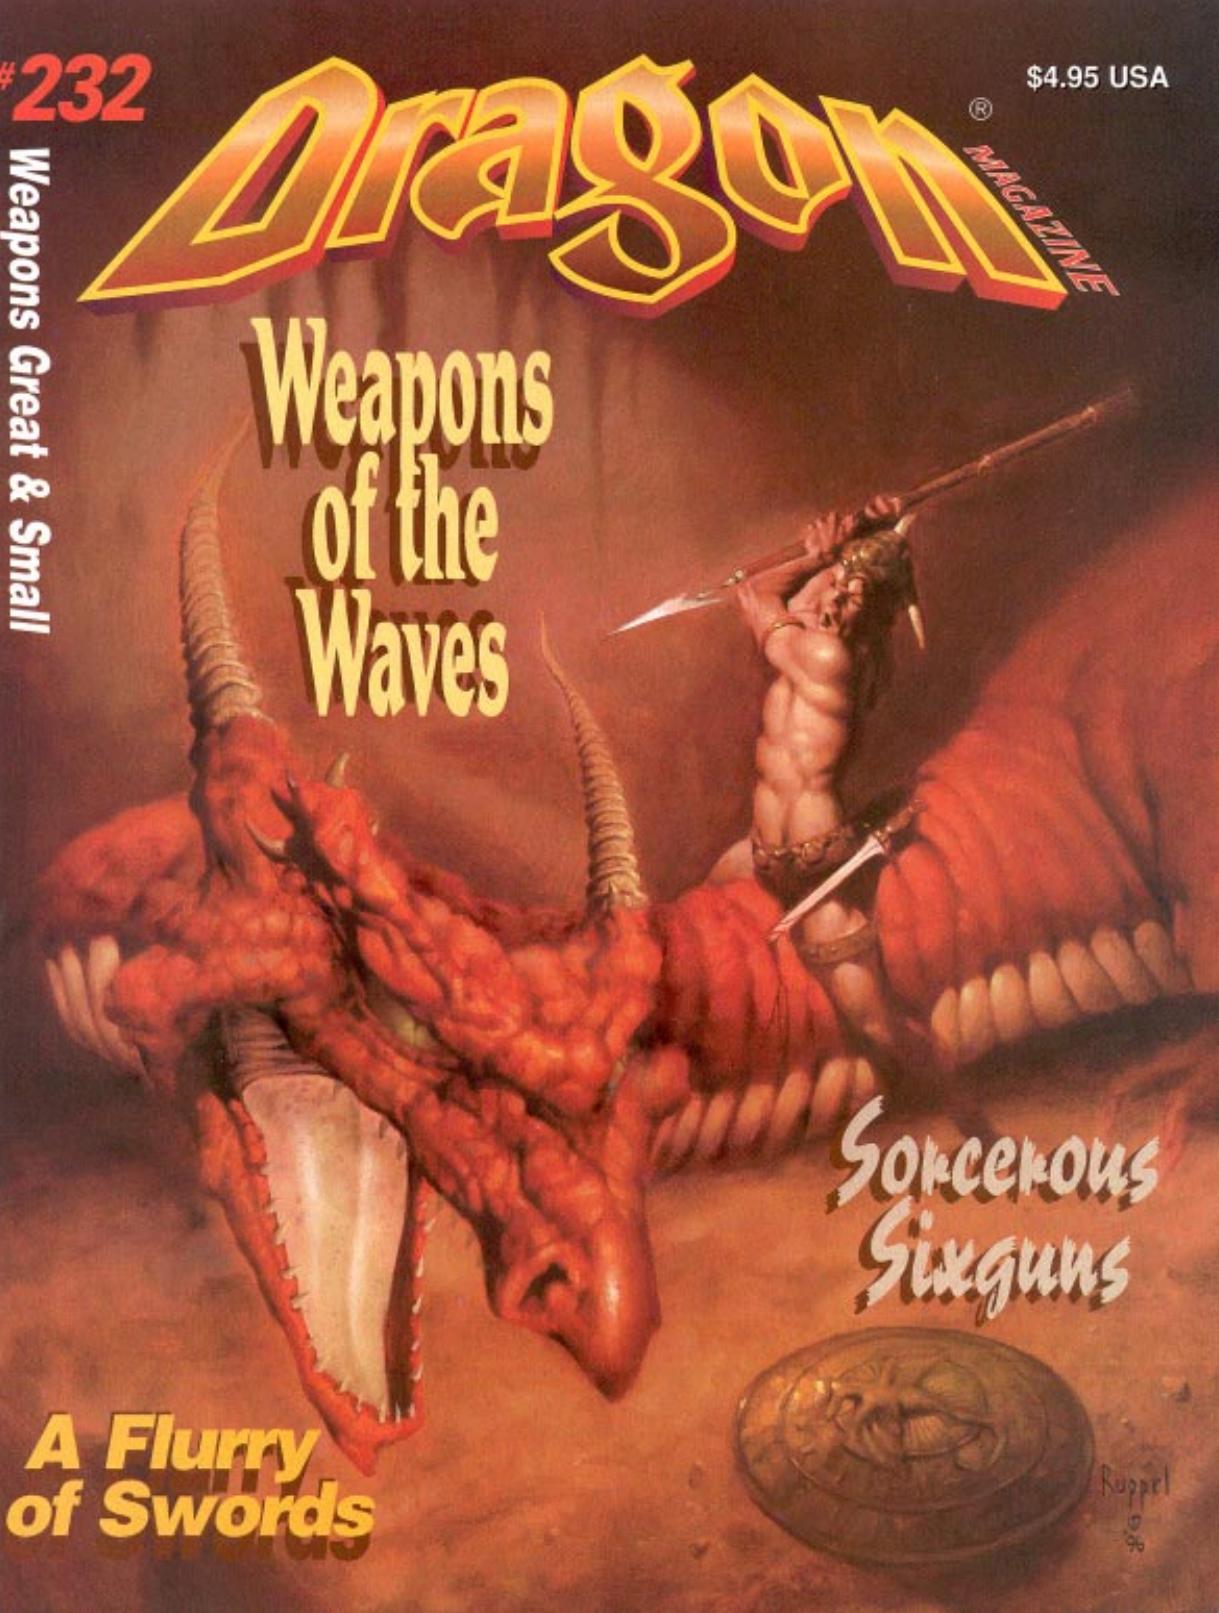 Dragon Magazine #232